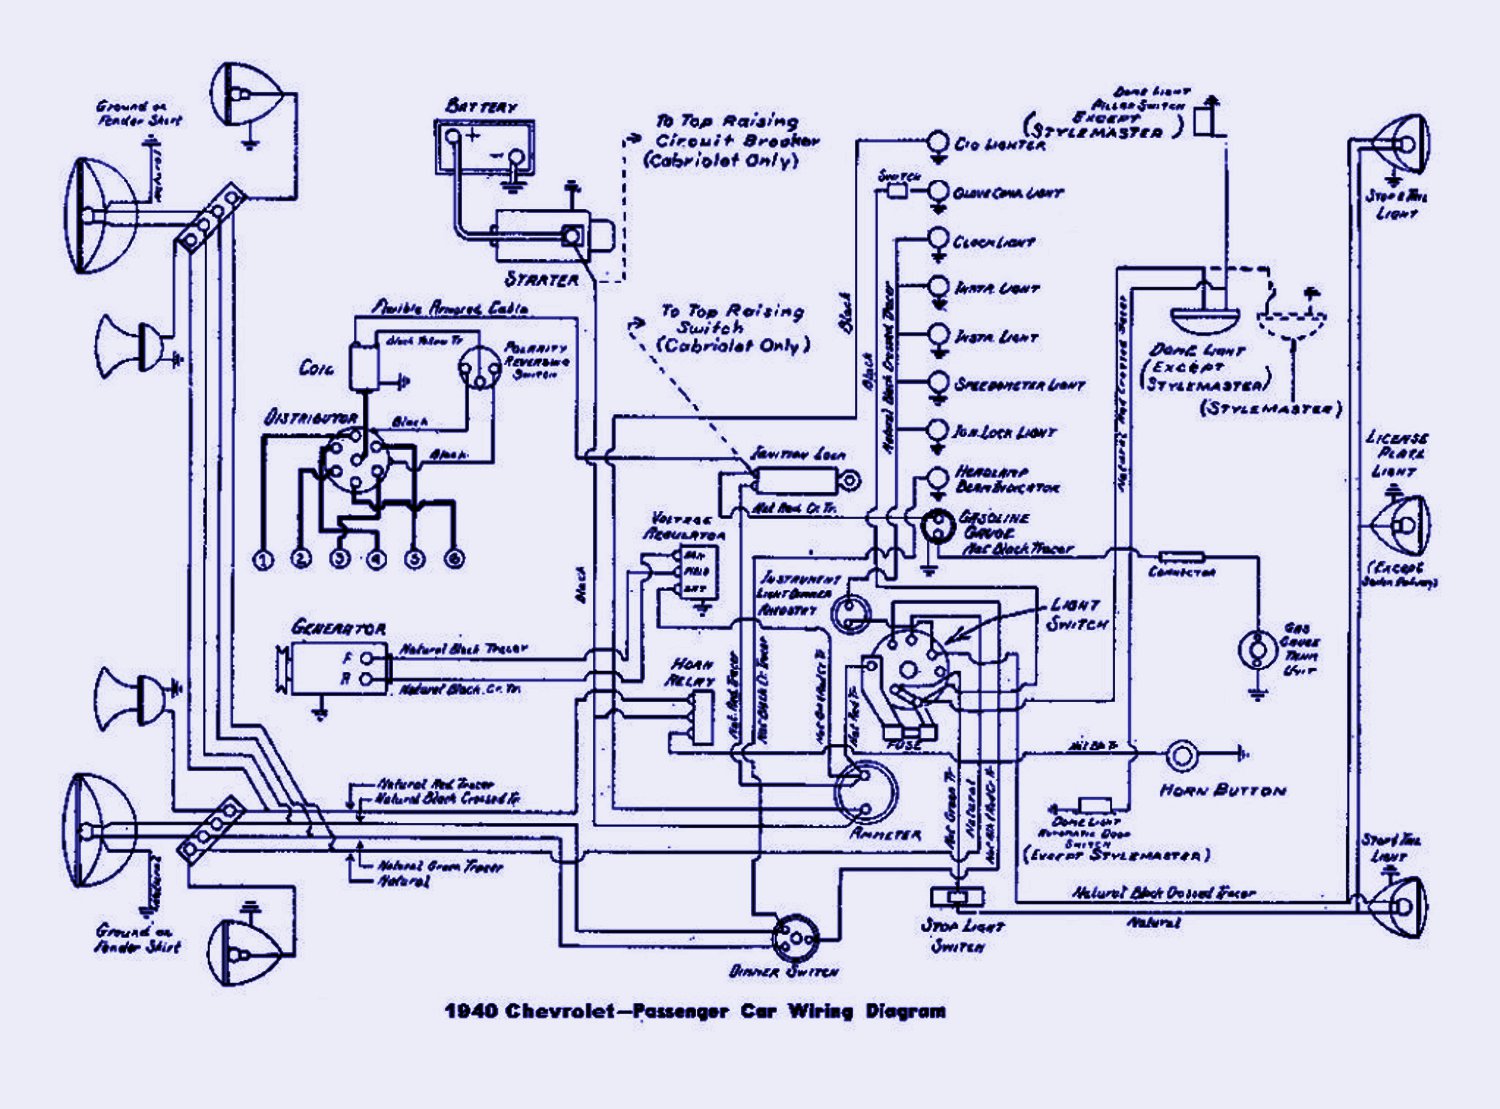 Diagram Jaguar Car Wiring Diagram Full Version Hd Quality Wiring Diagram Mediagrame Fpsu It